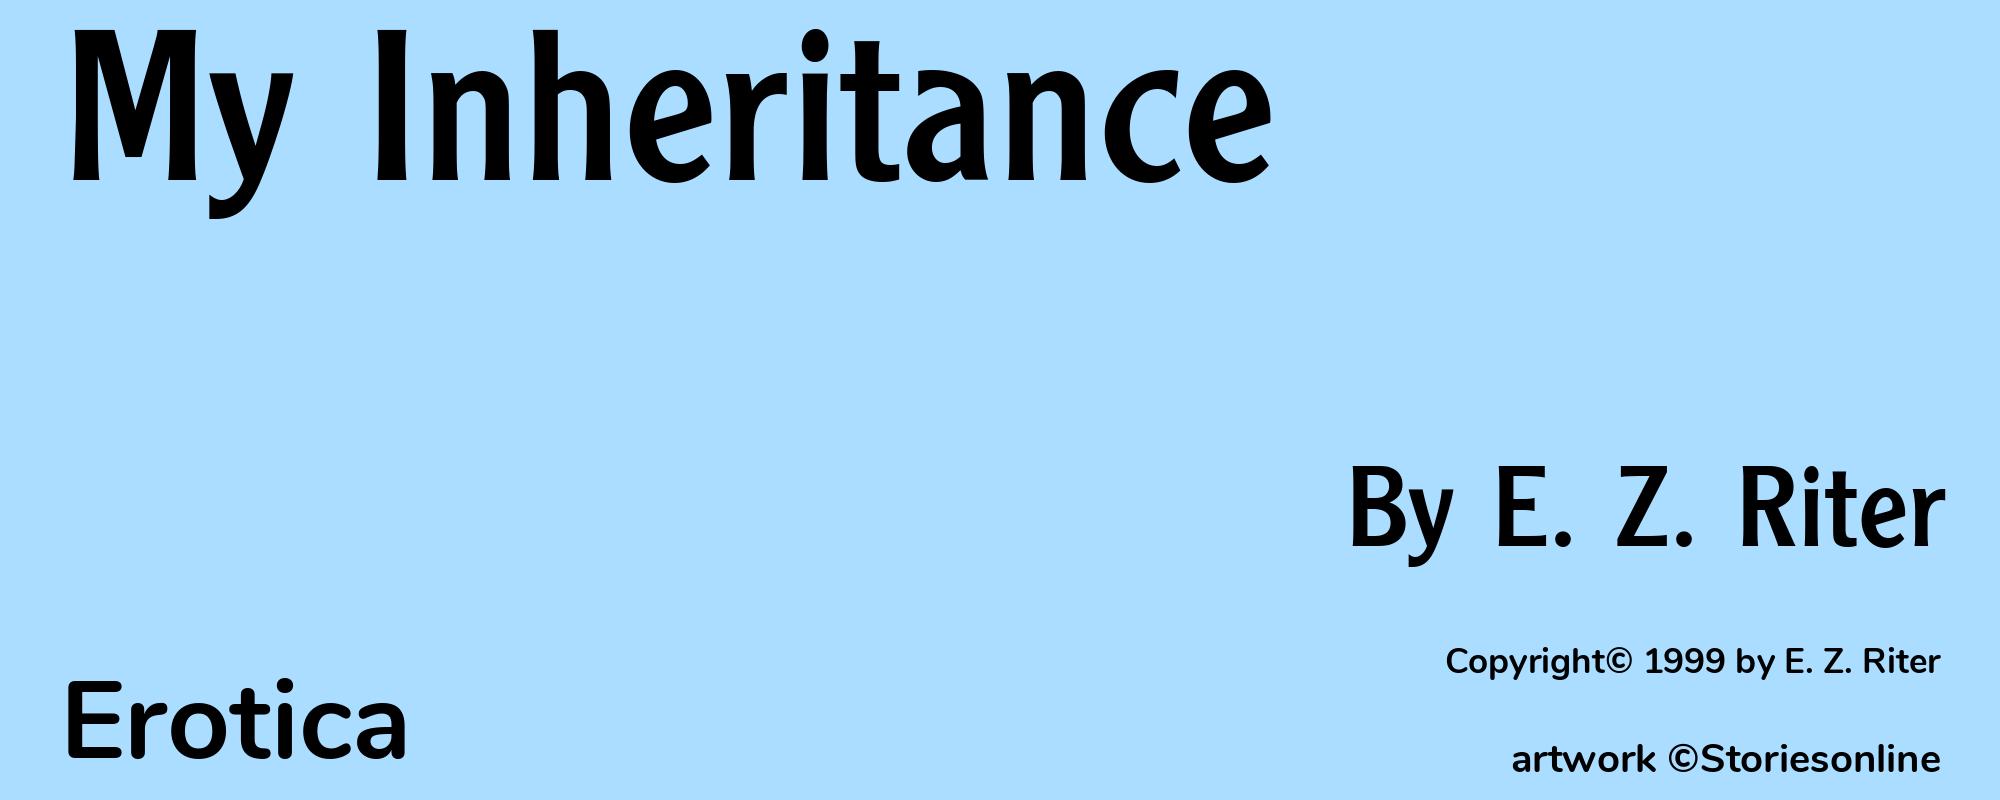 My Inheritance - Cover